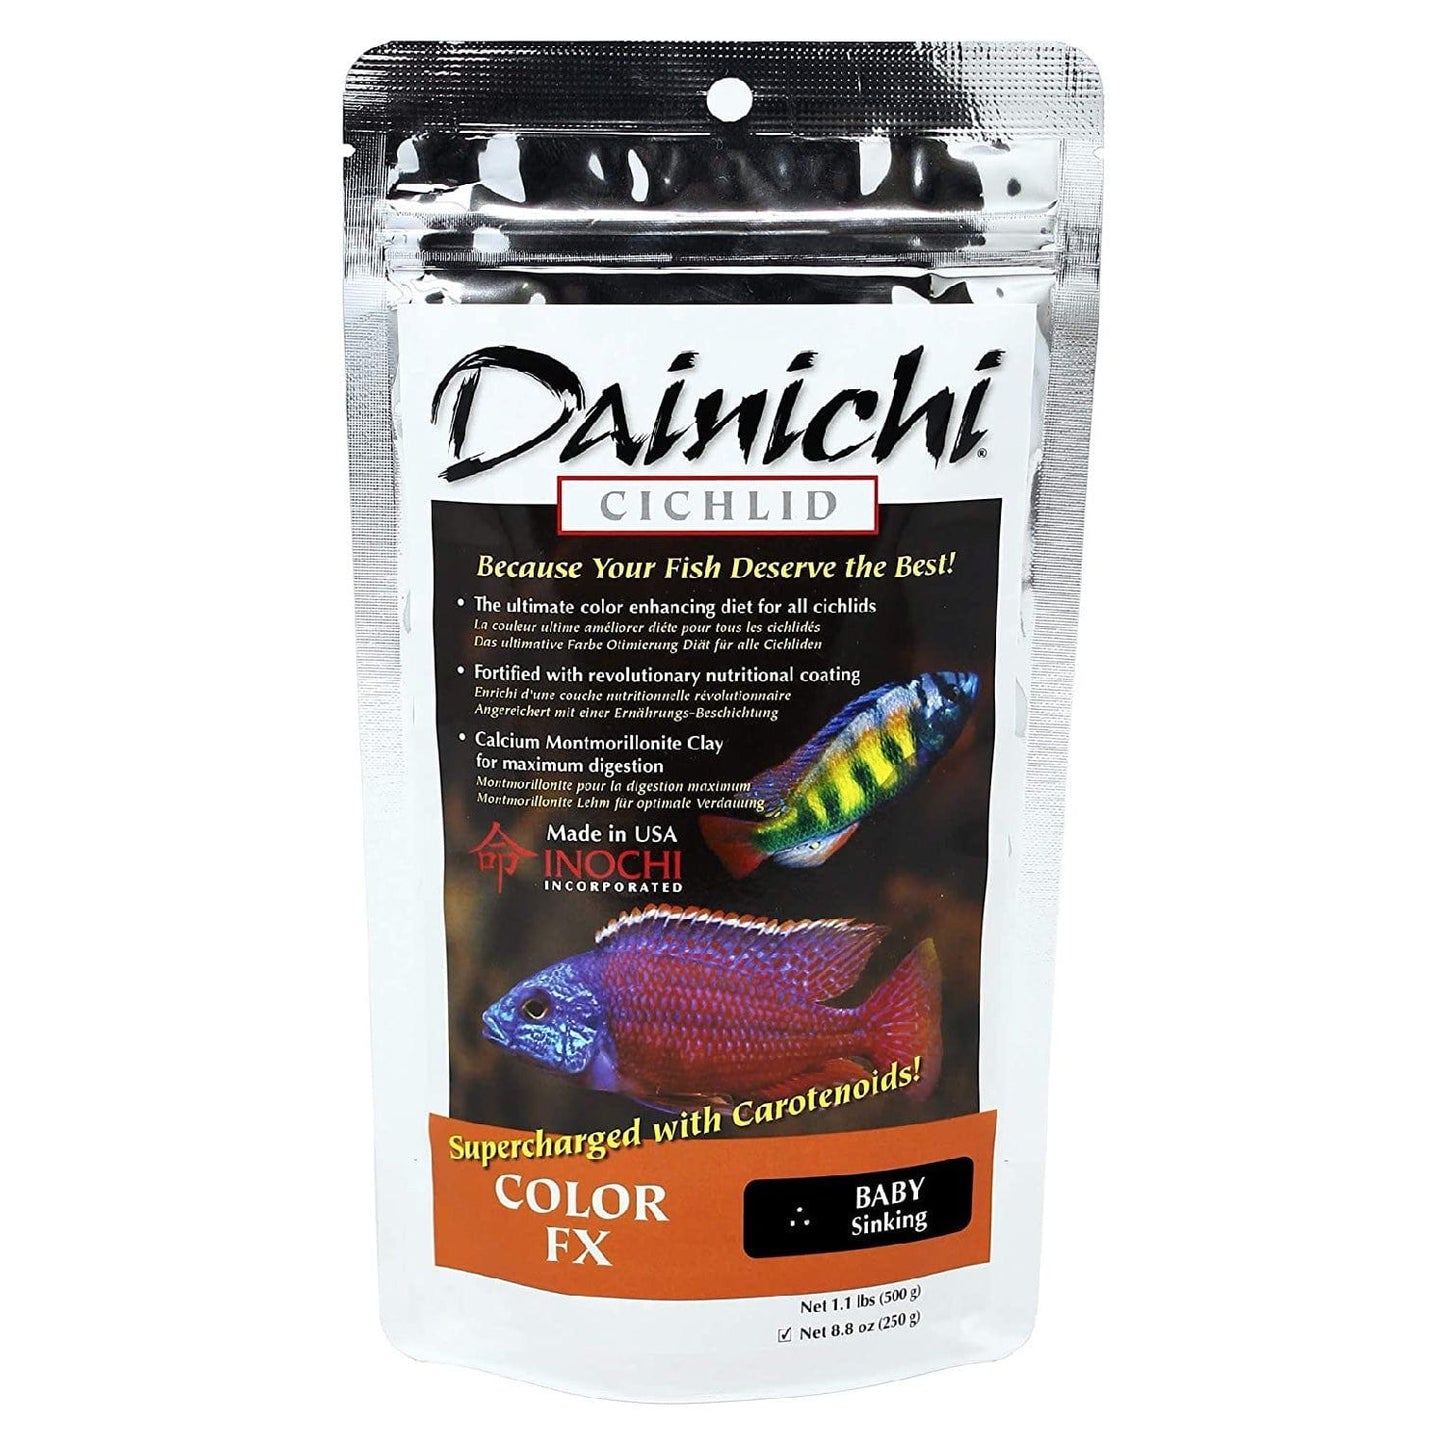 Dainichi | Cichlid Color FX (Sinking) Baby (1mm) / 8.8 oz (250g) 713166126025 Super Cichlids